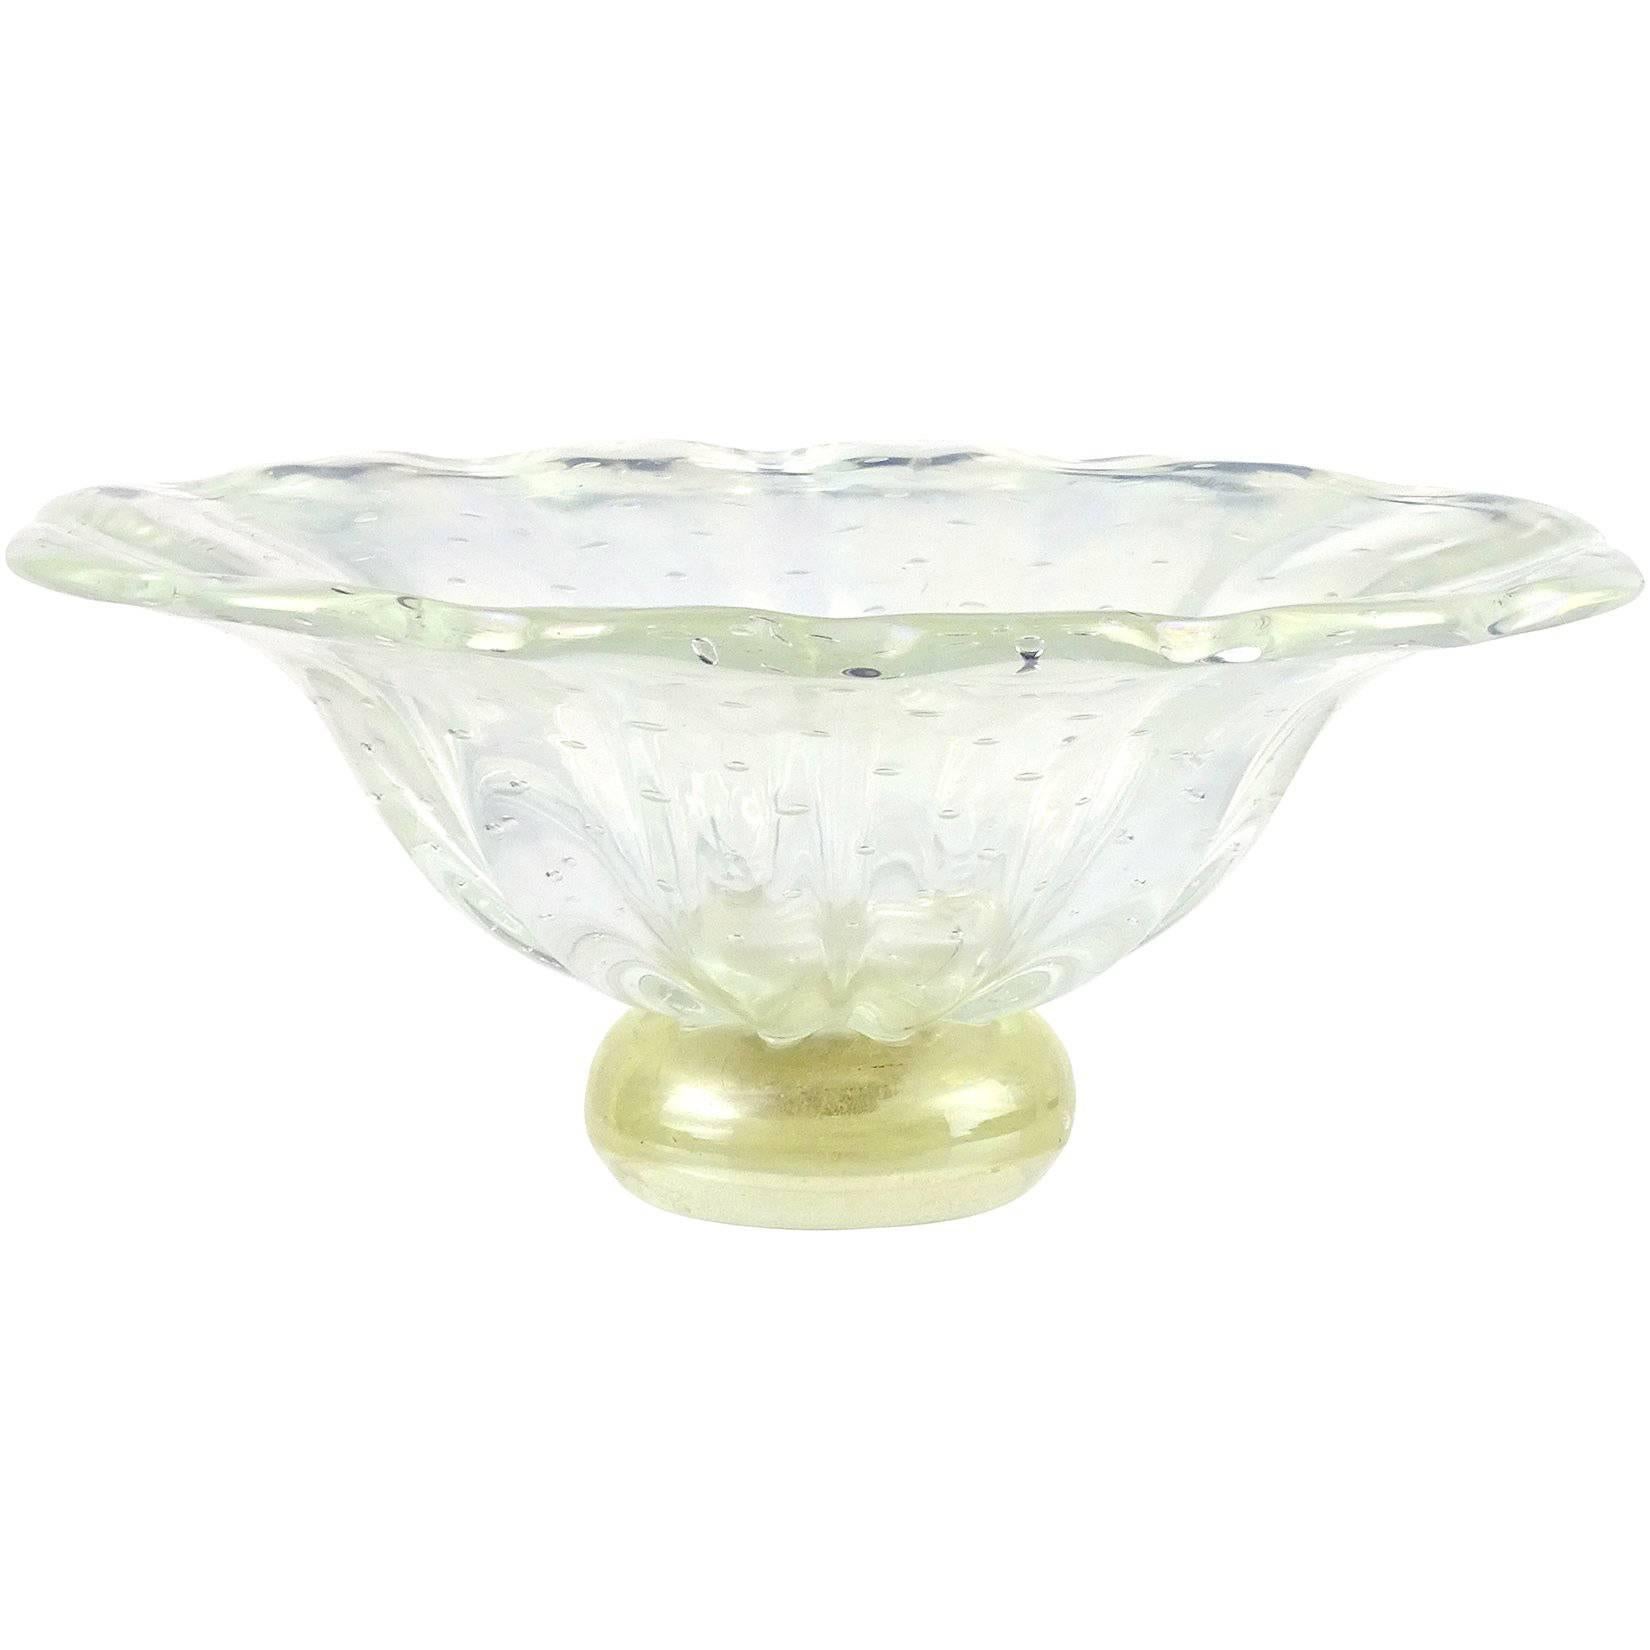 Barovier Toso Murano Iridescent Gold Flecks Italian Art Glass Centerpiece Bowl